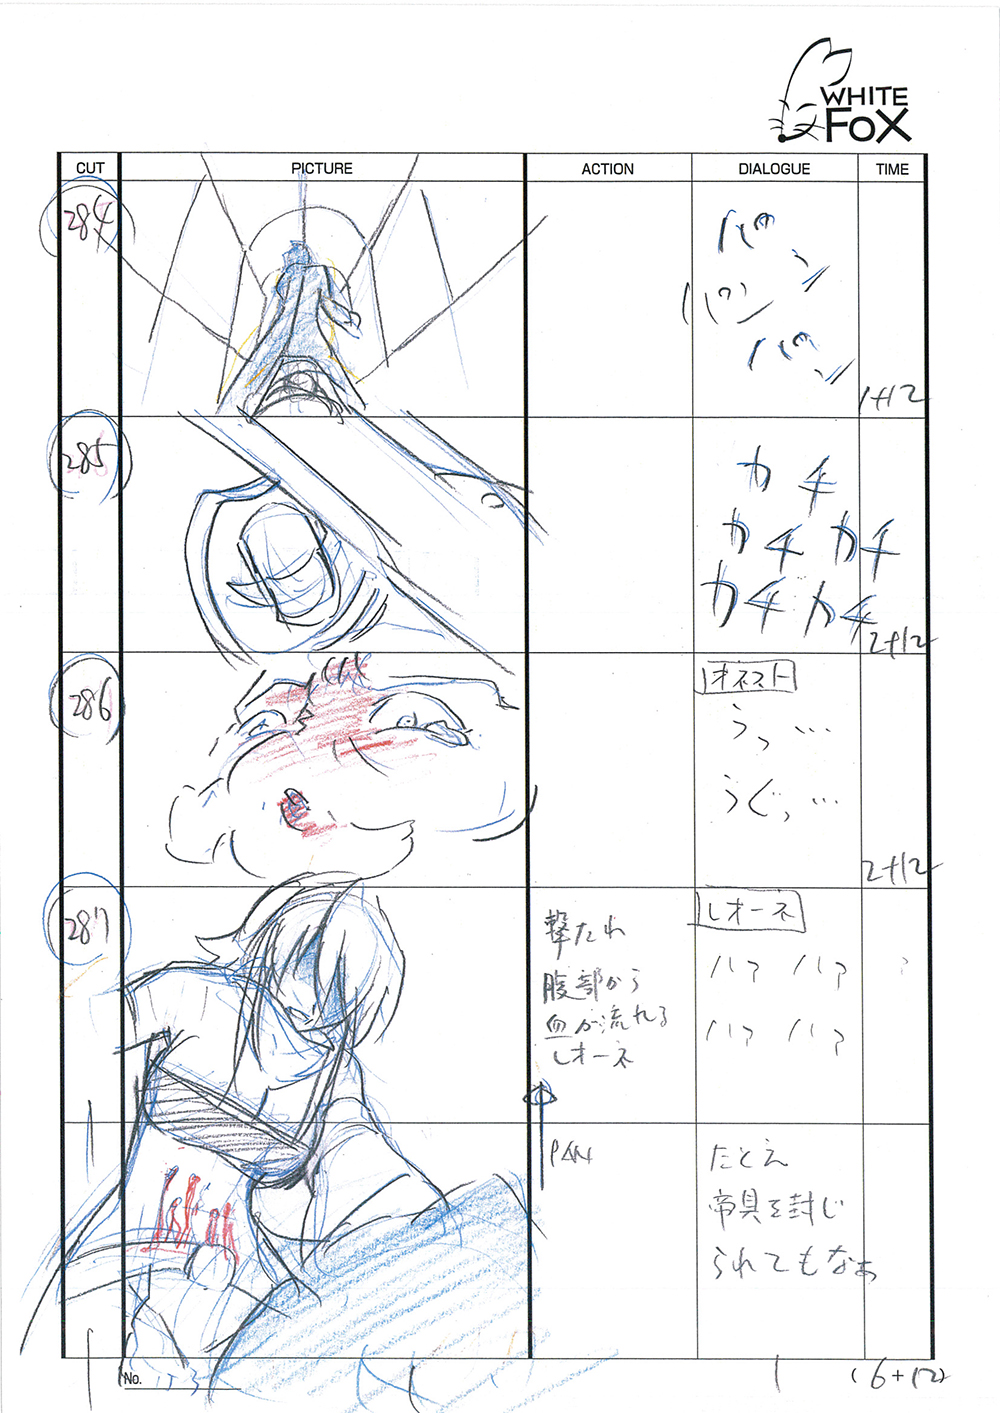 Akame ga Kill Episode 24 Storyboard Leak 158